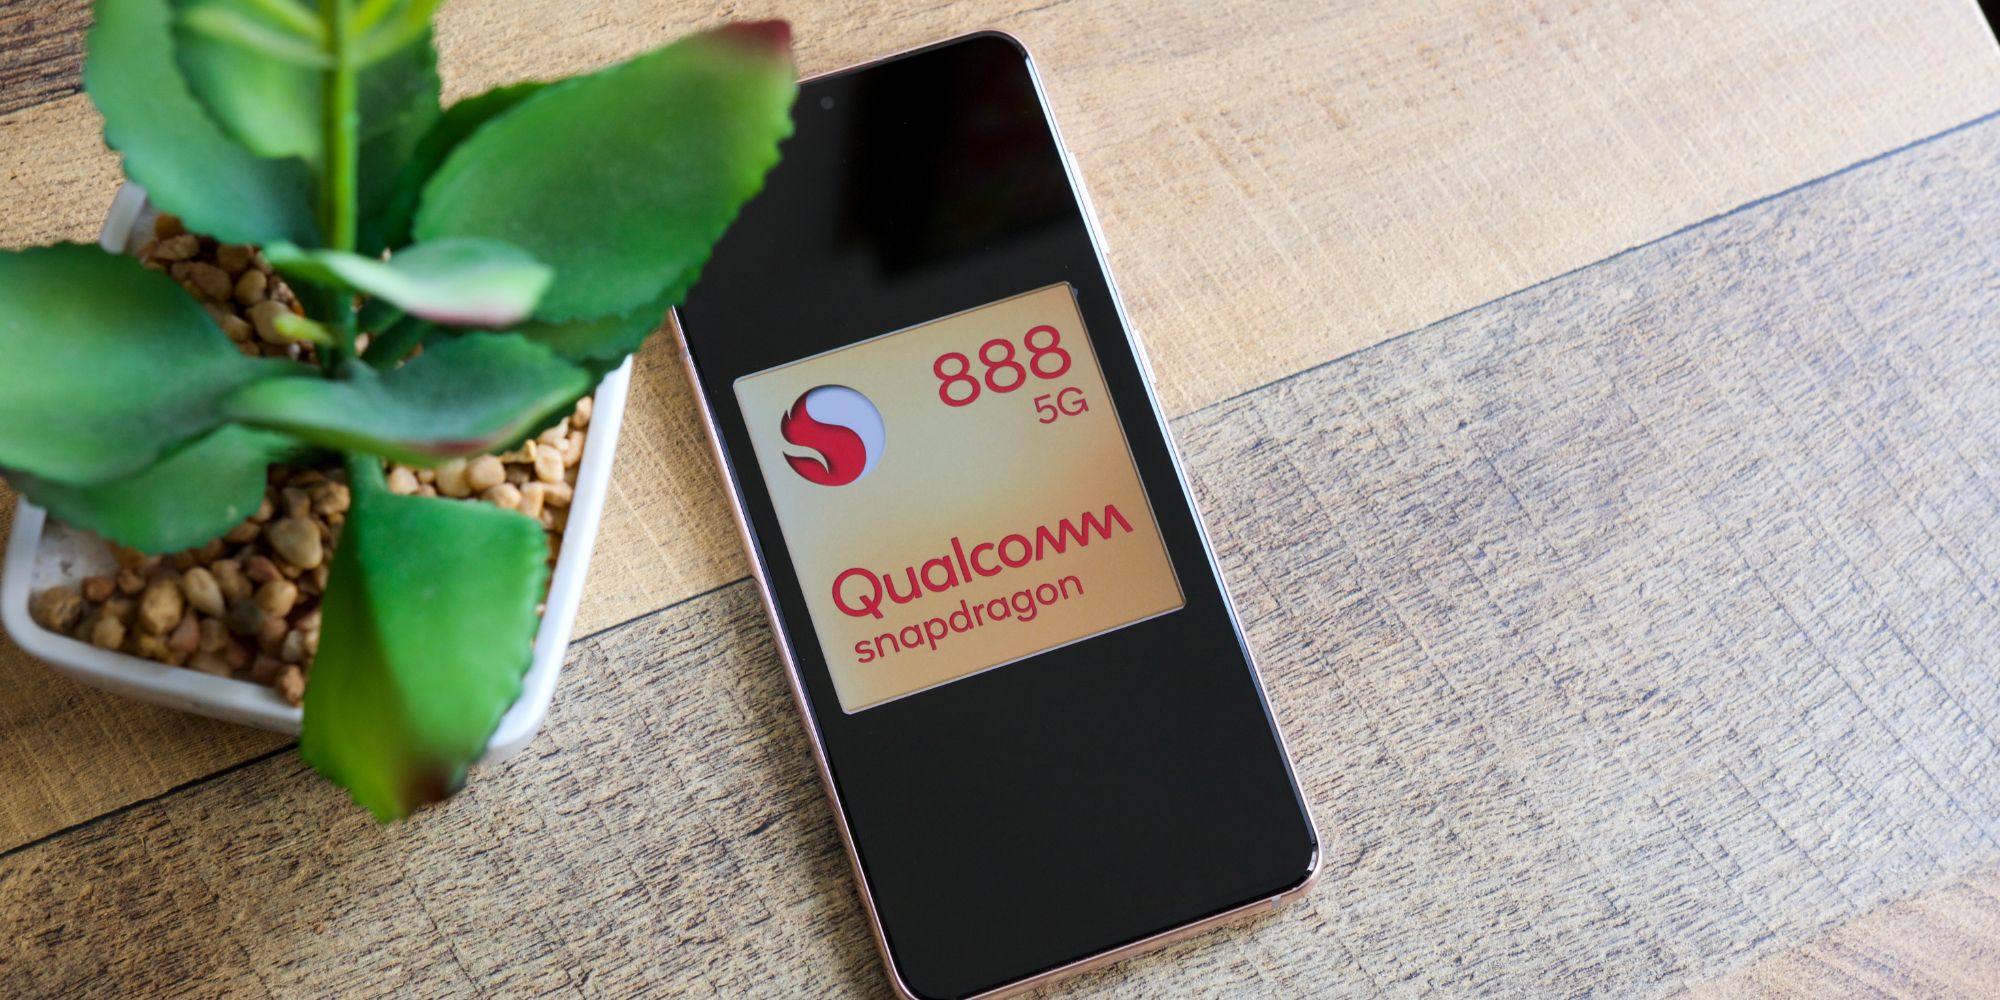 Qualcomm Snapdragon 888 logo